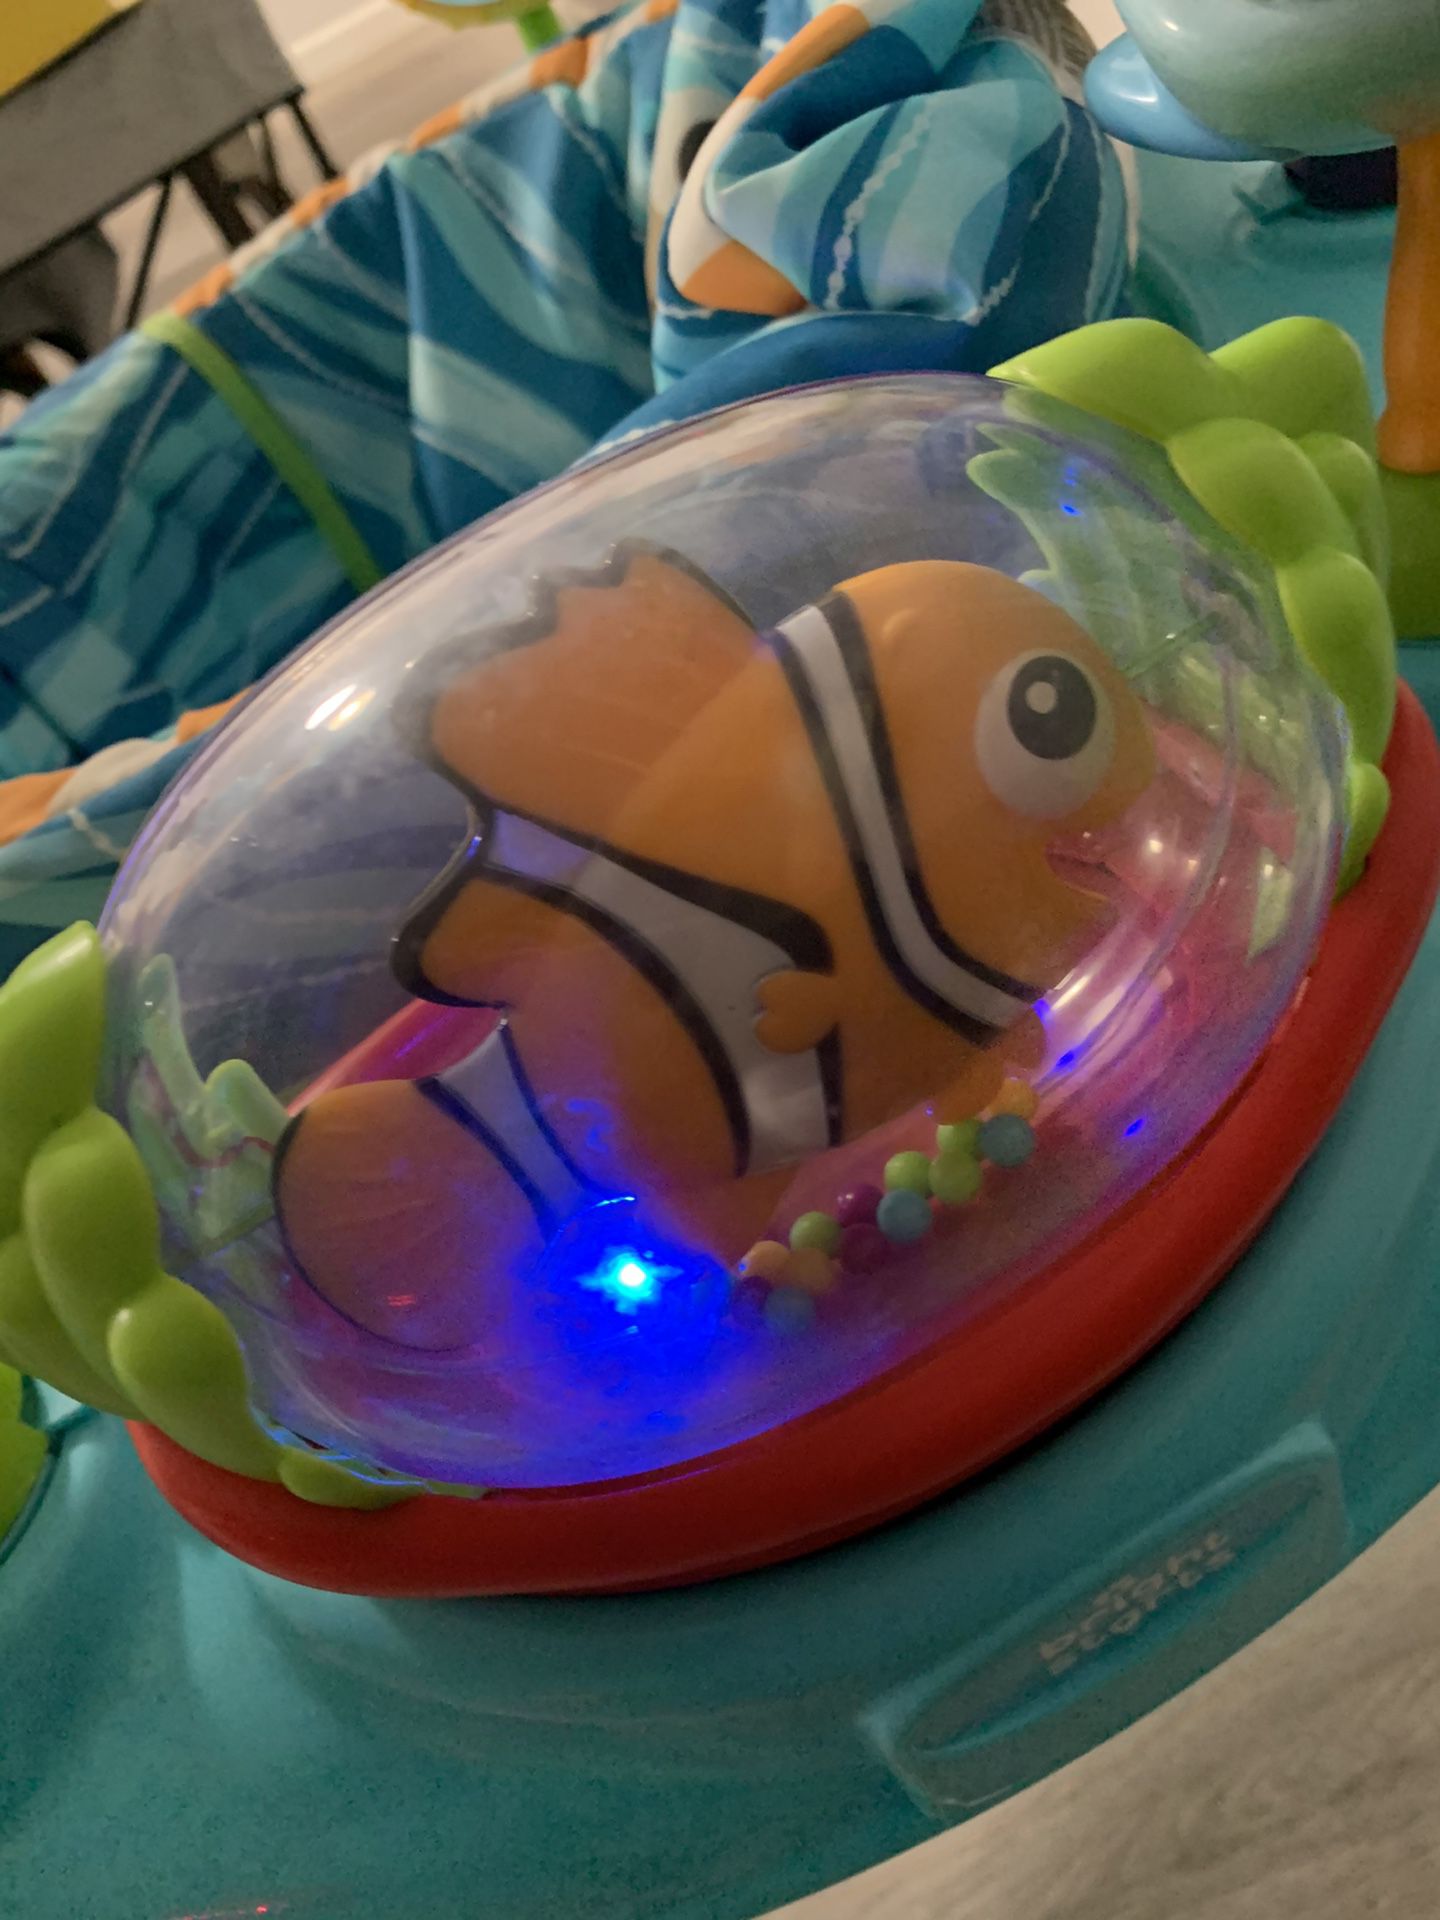 Finding Nemo activity bouncer